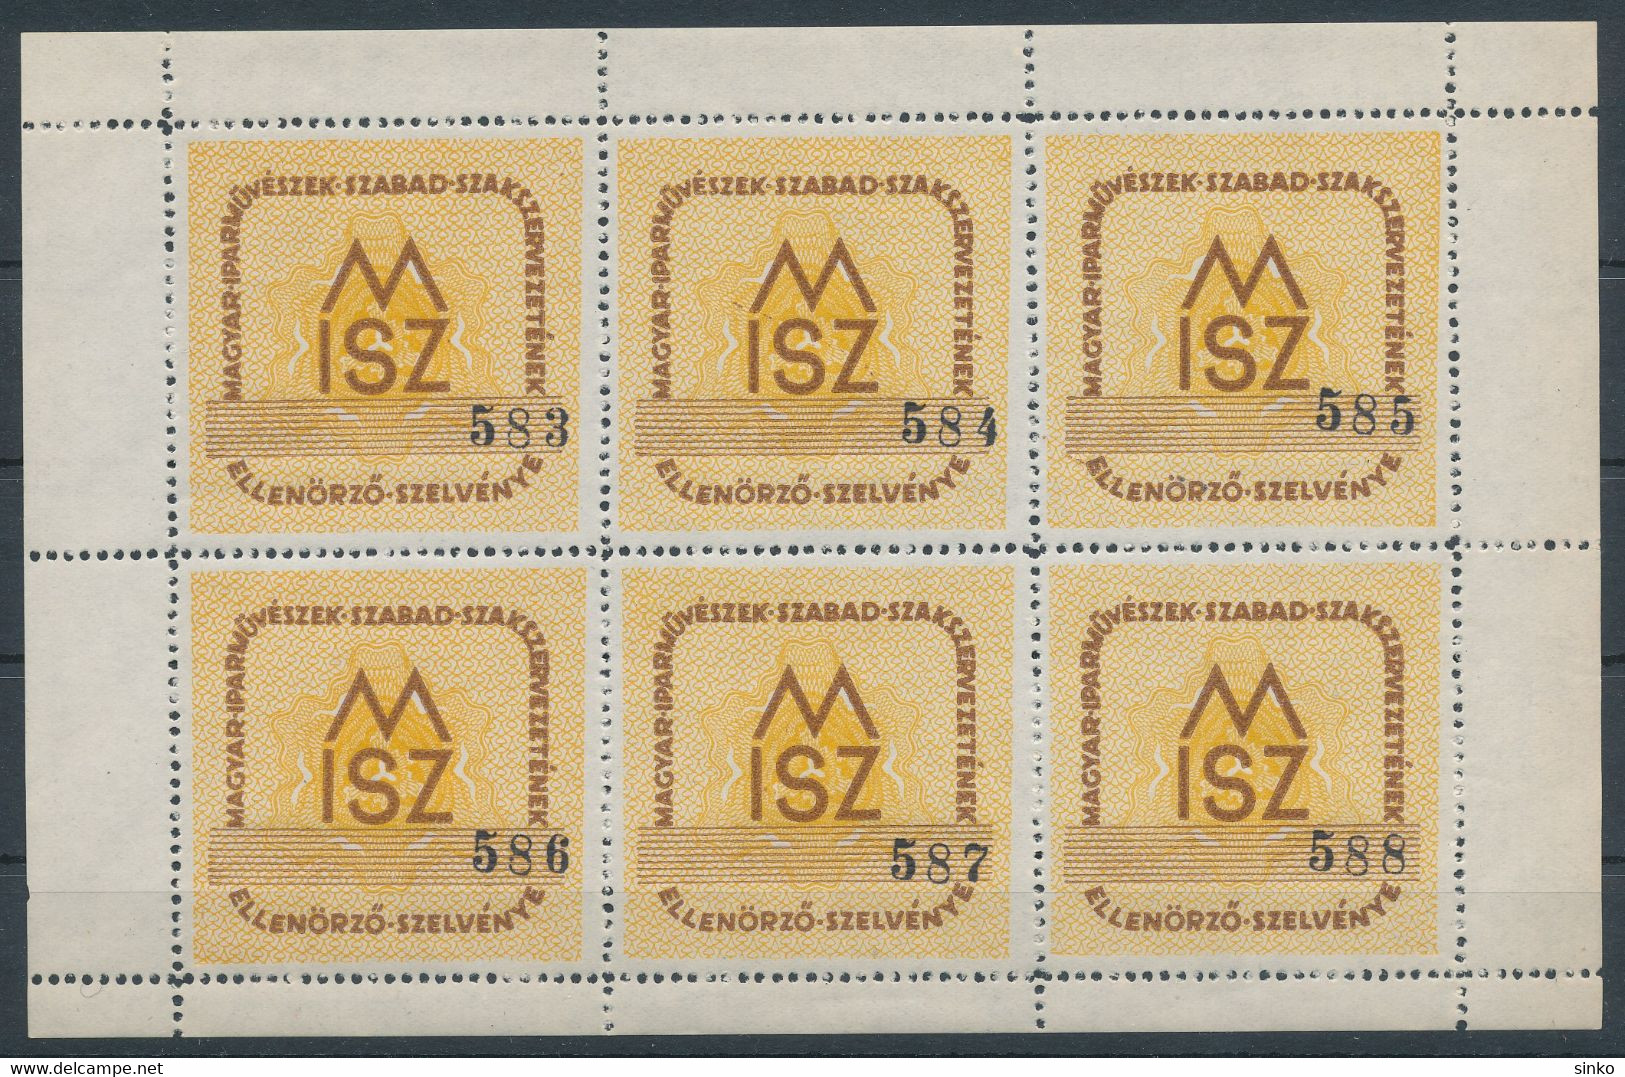 1942. Hungarian-Designers'-Free-Labor Union Stub, Miniature Sheet - Foglietto Ricordo